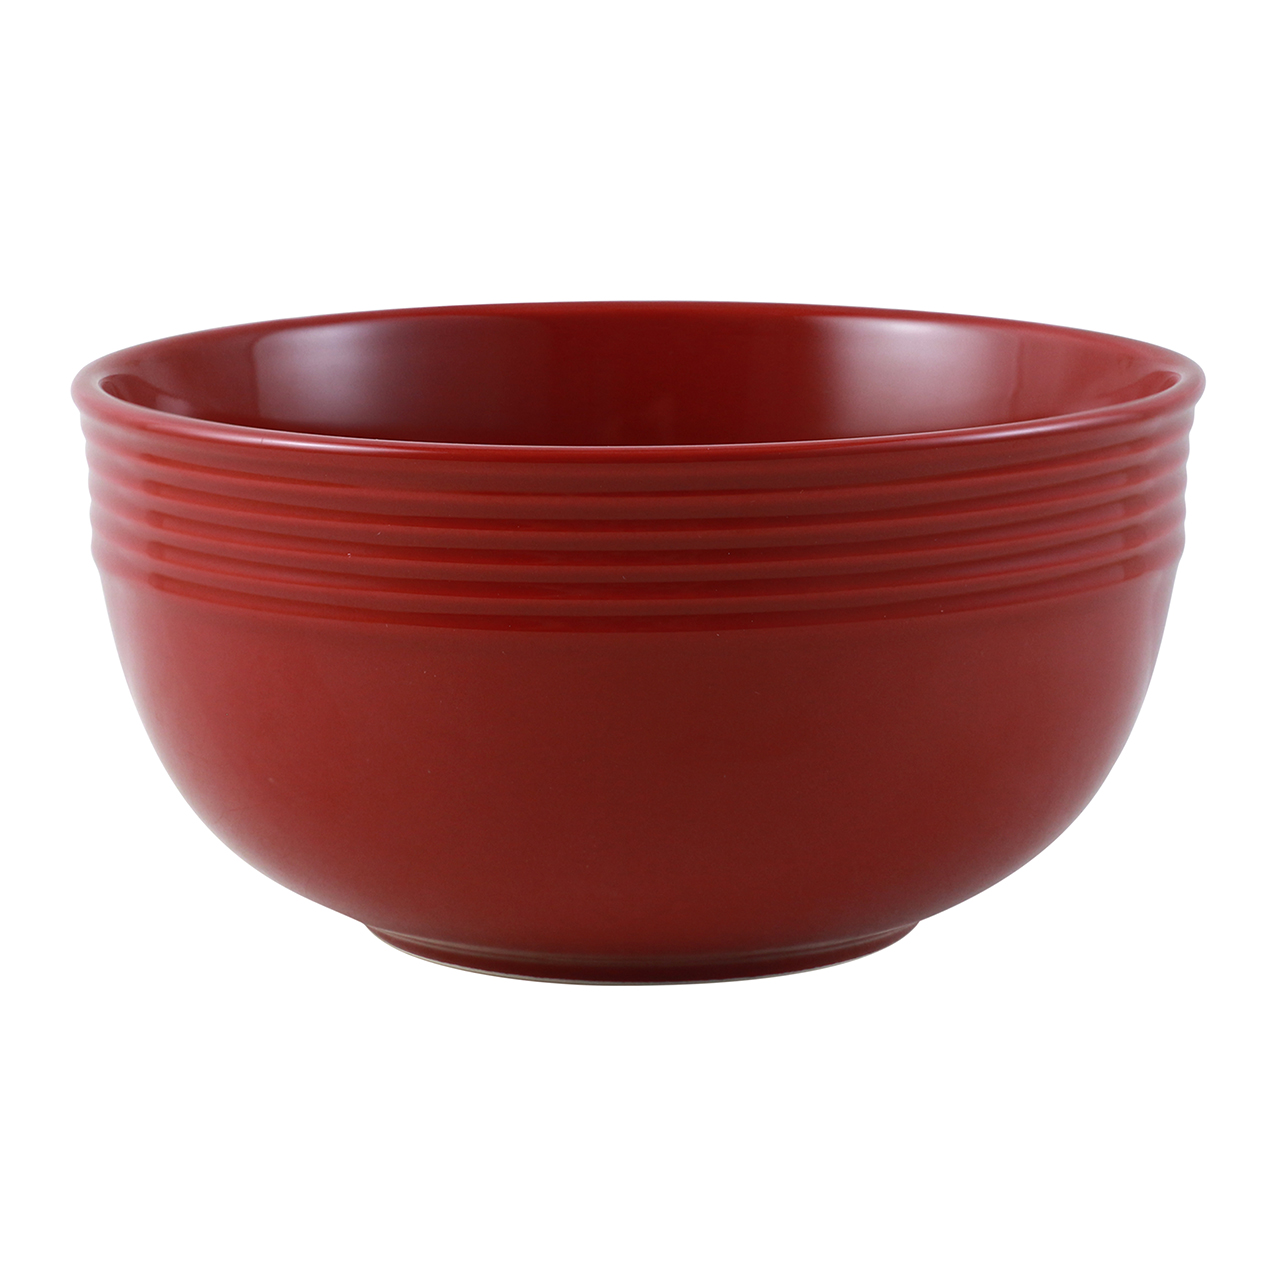 Mainstays Chiara Stoneware 6.25" Round Red Bowl - image 1 of 5